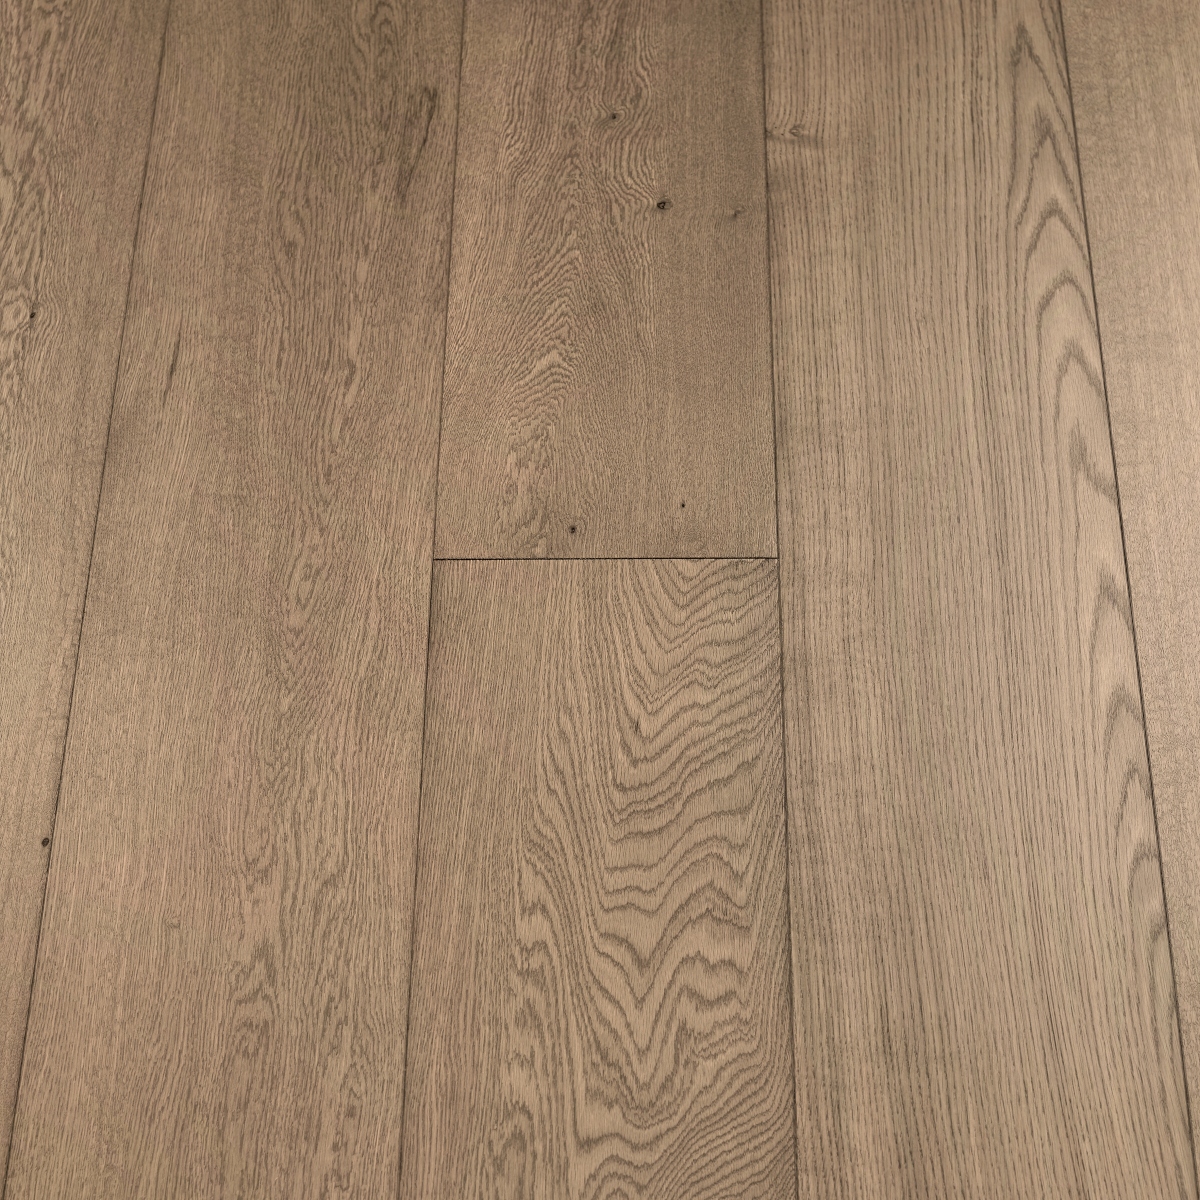 Ash 190mm x 18mm x 1900mm Bespoke Wood Flooring